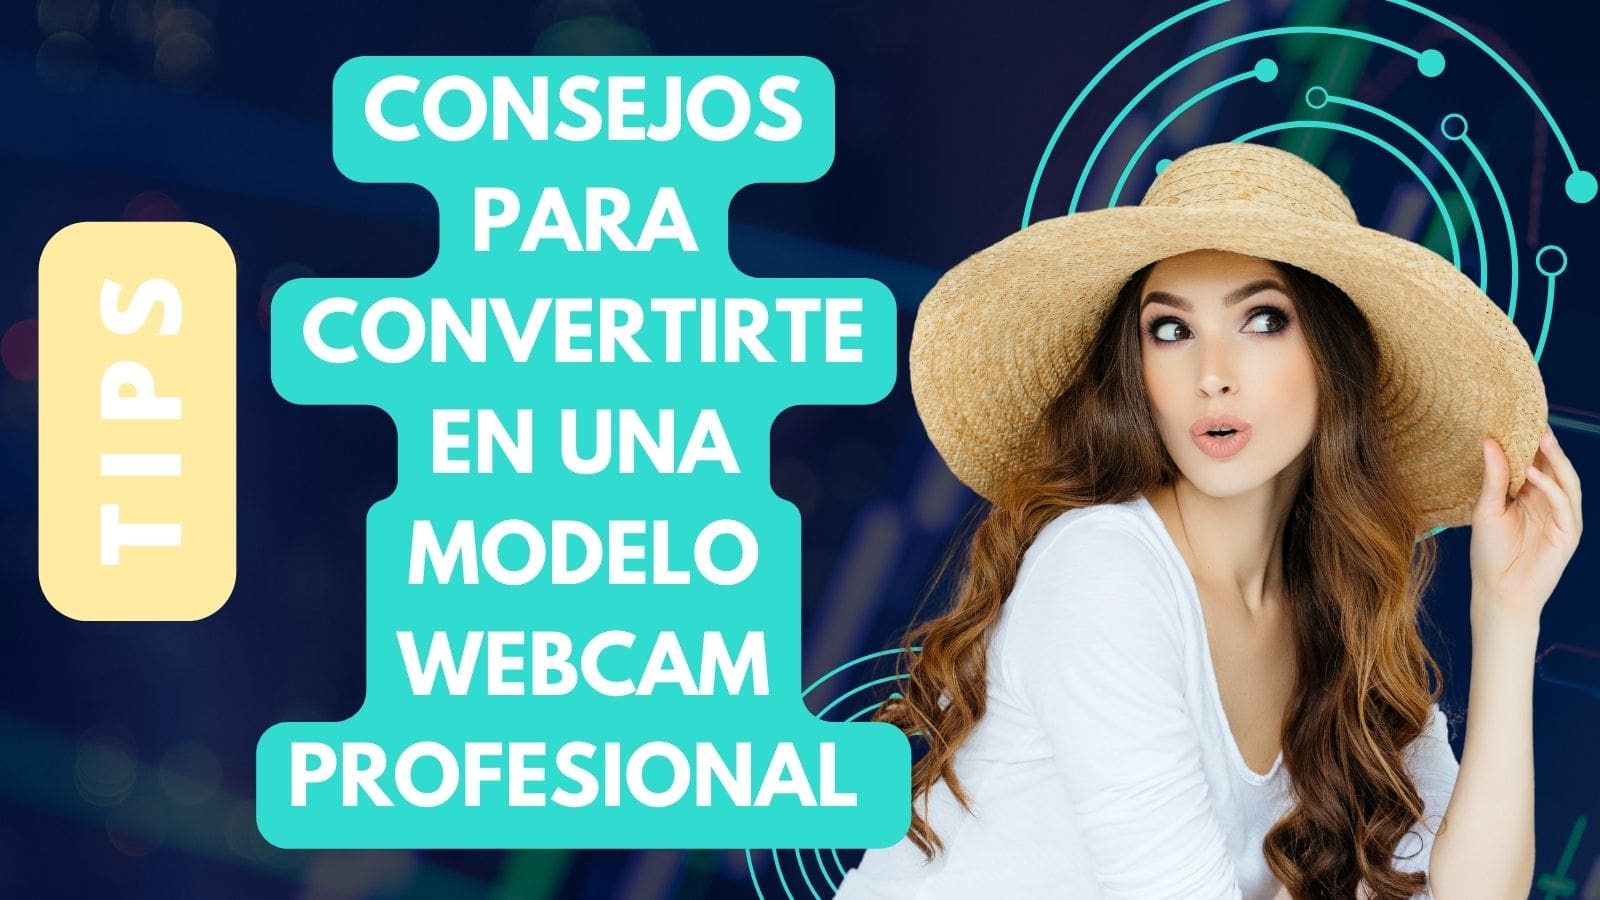 Tips consejos para convertirte en una modelo webcam profesional